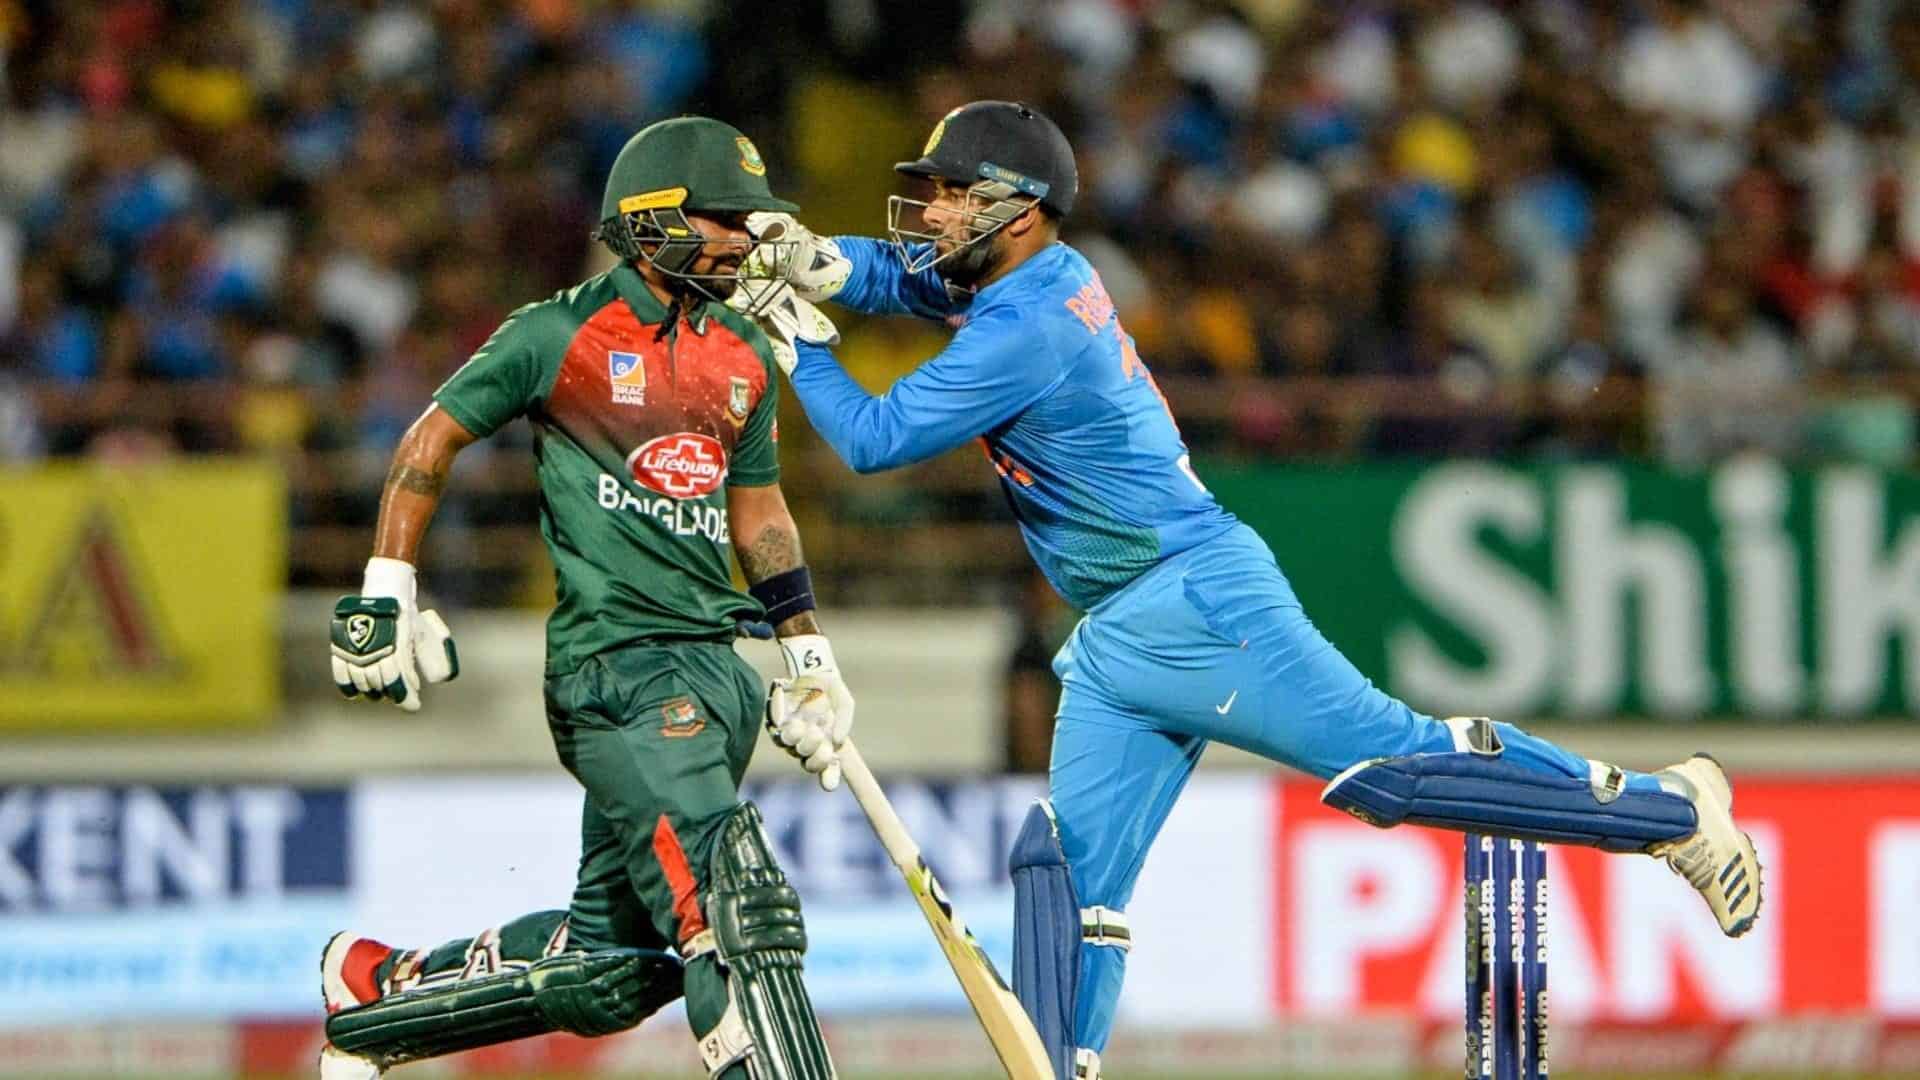 IND vs BAN: Bangladesh Cricket Board Shift Third ODI to Chittagong From Dhaka Due To Protest Threat